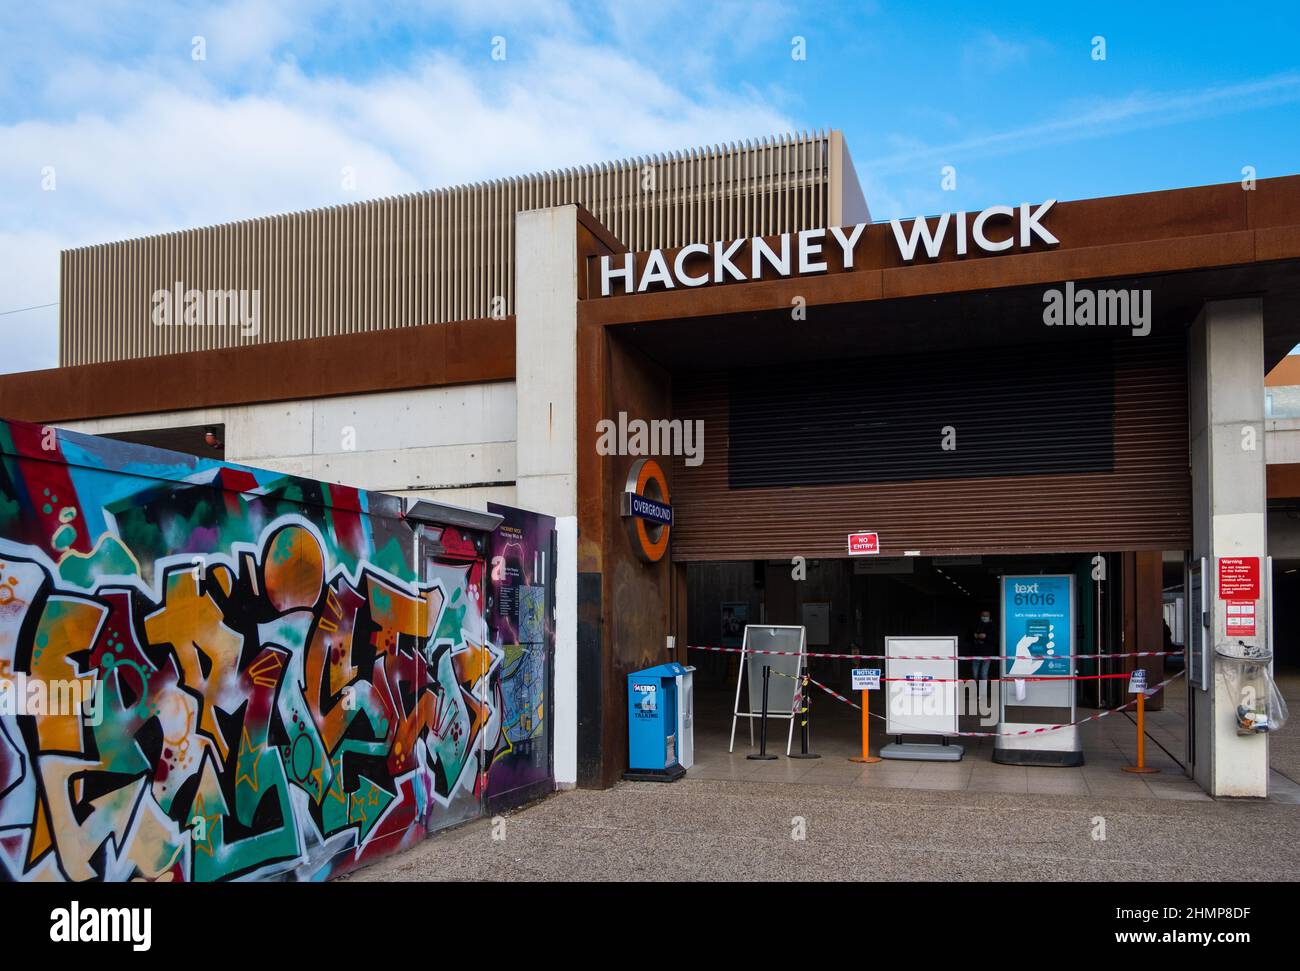 Vordereingang zur Hackney Wick Station mit Graffiti-Wand Stockfoto